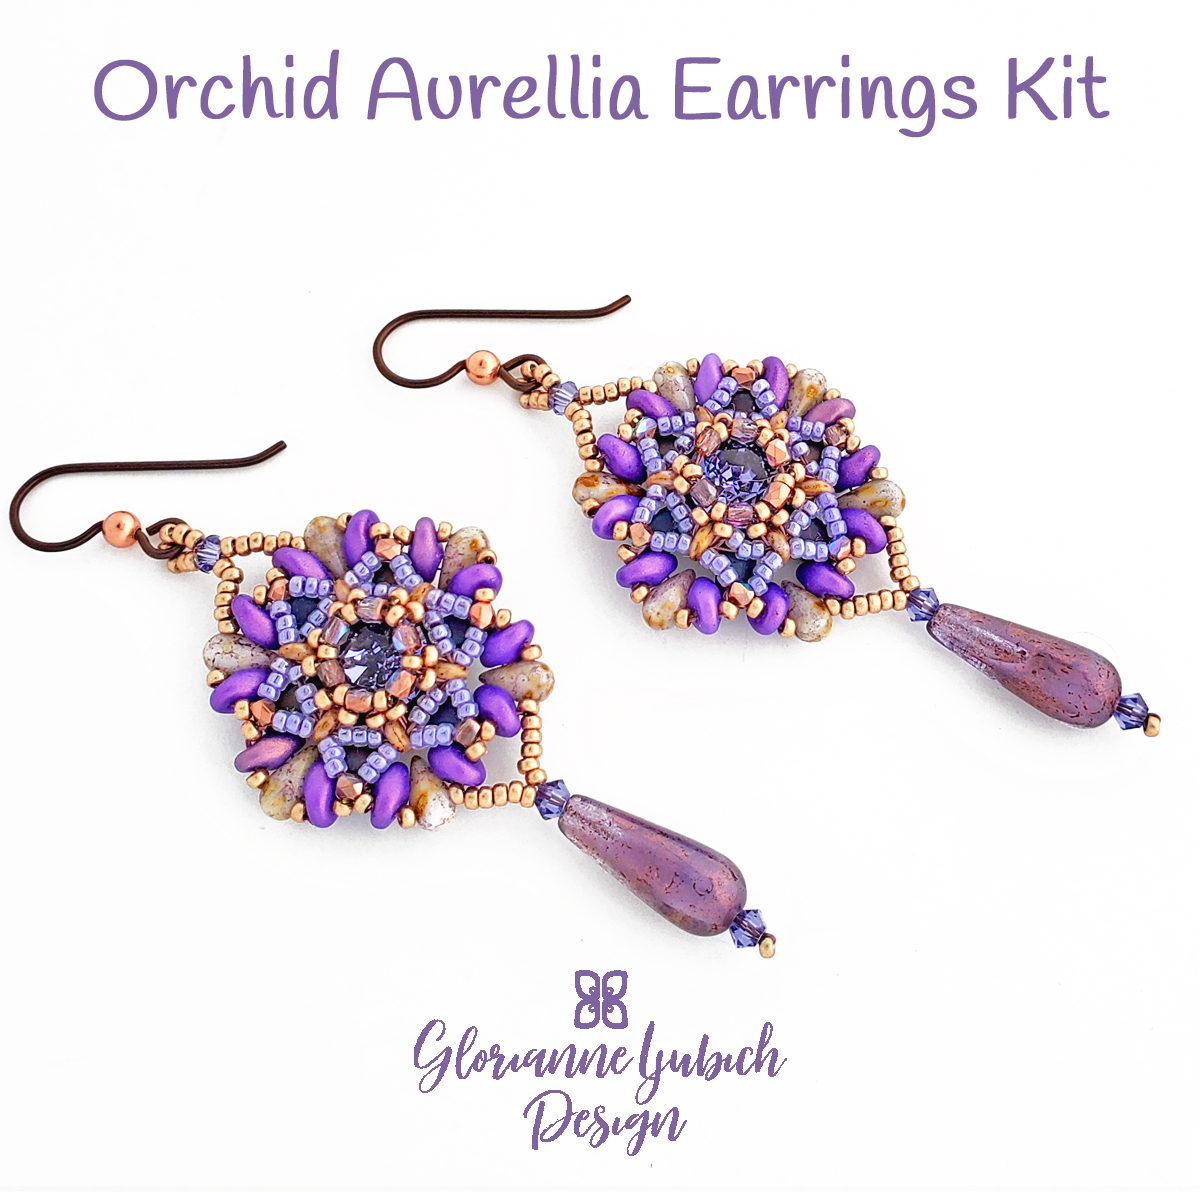 Aurellia Beaded Earrings Kit - Glorianne Ljubich Design